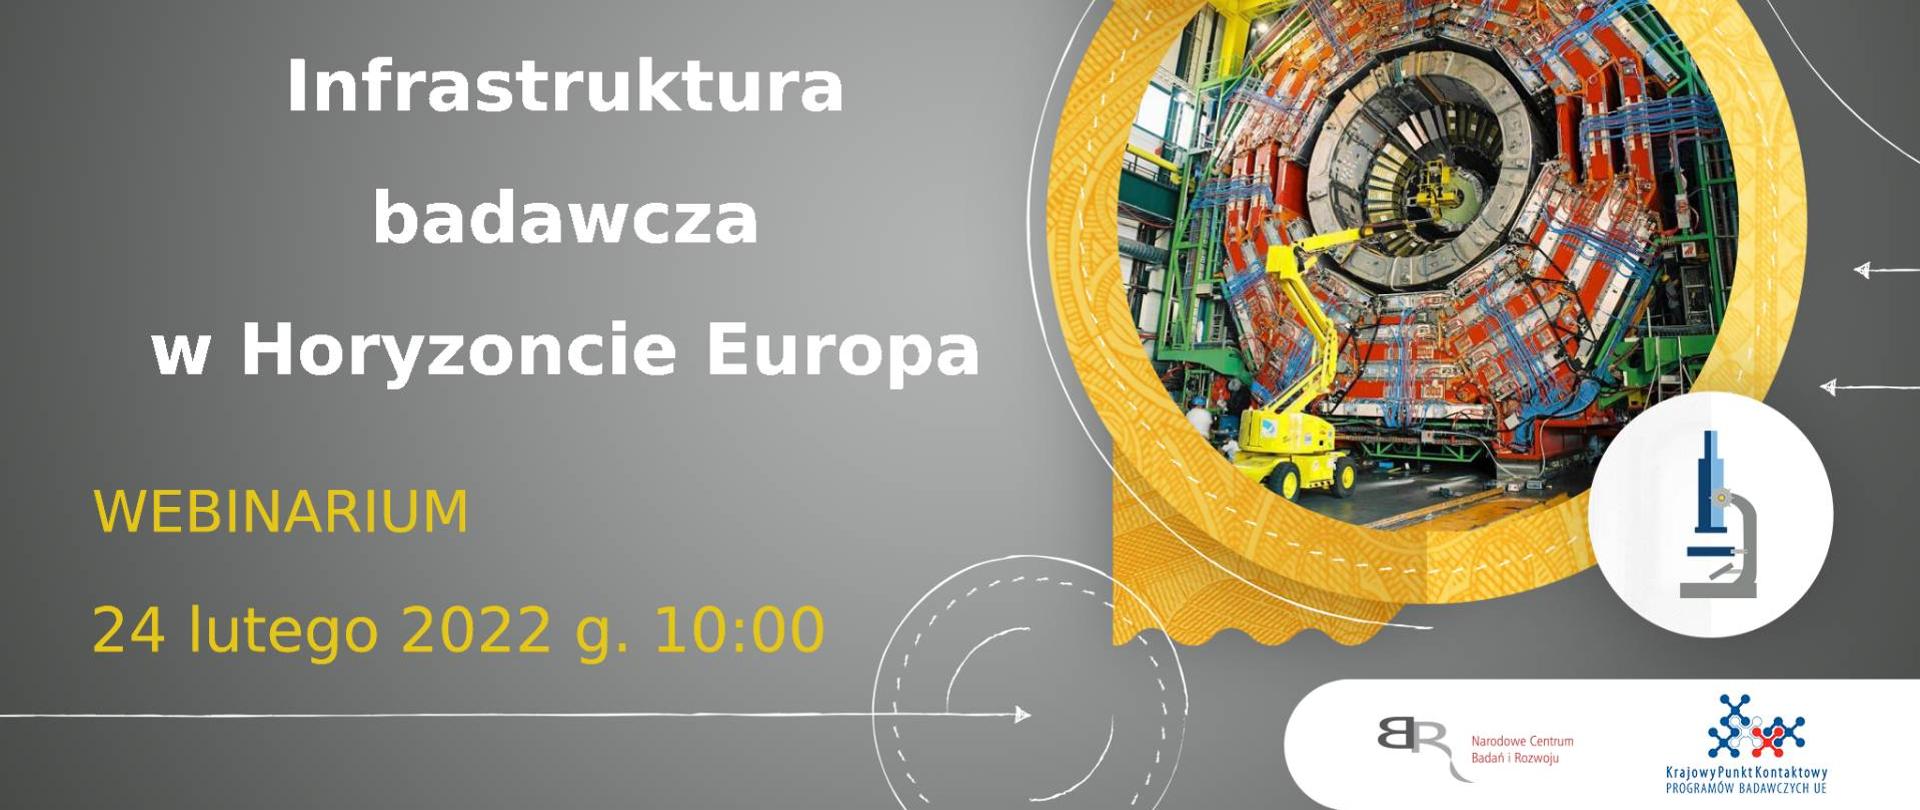 Horyzont Europa
Infrastruktura badawcza w Horyzoncie Europa
Webinarium
24 lutego 2022 g. 10:00